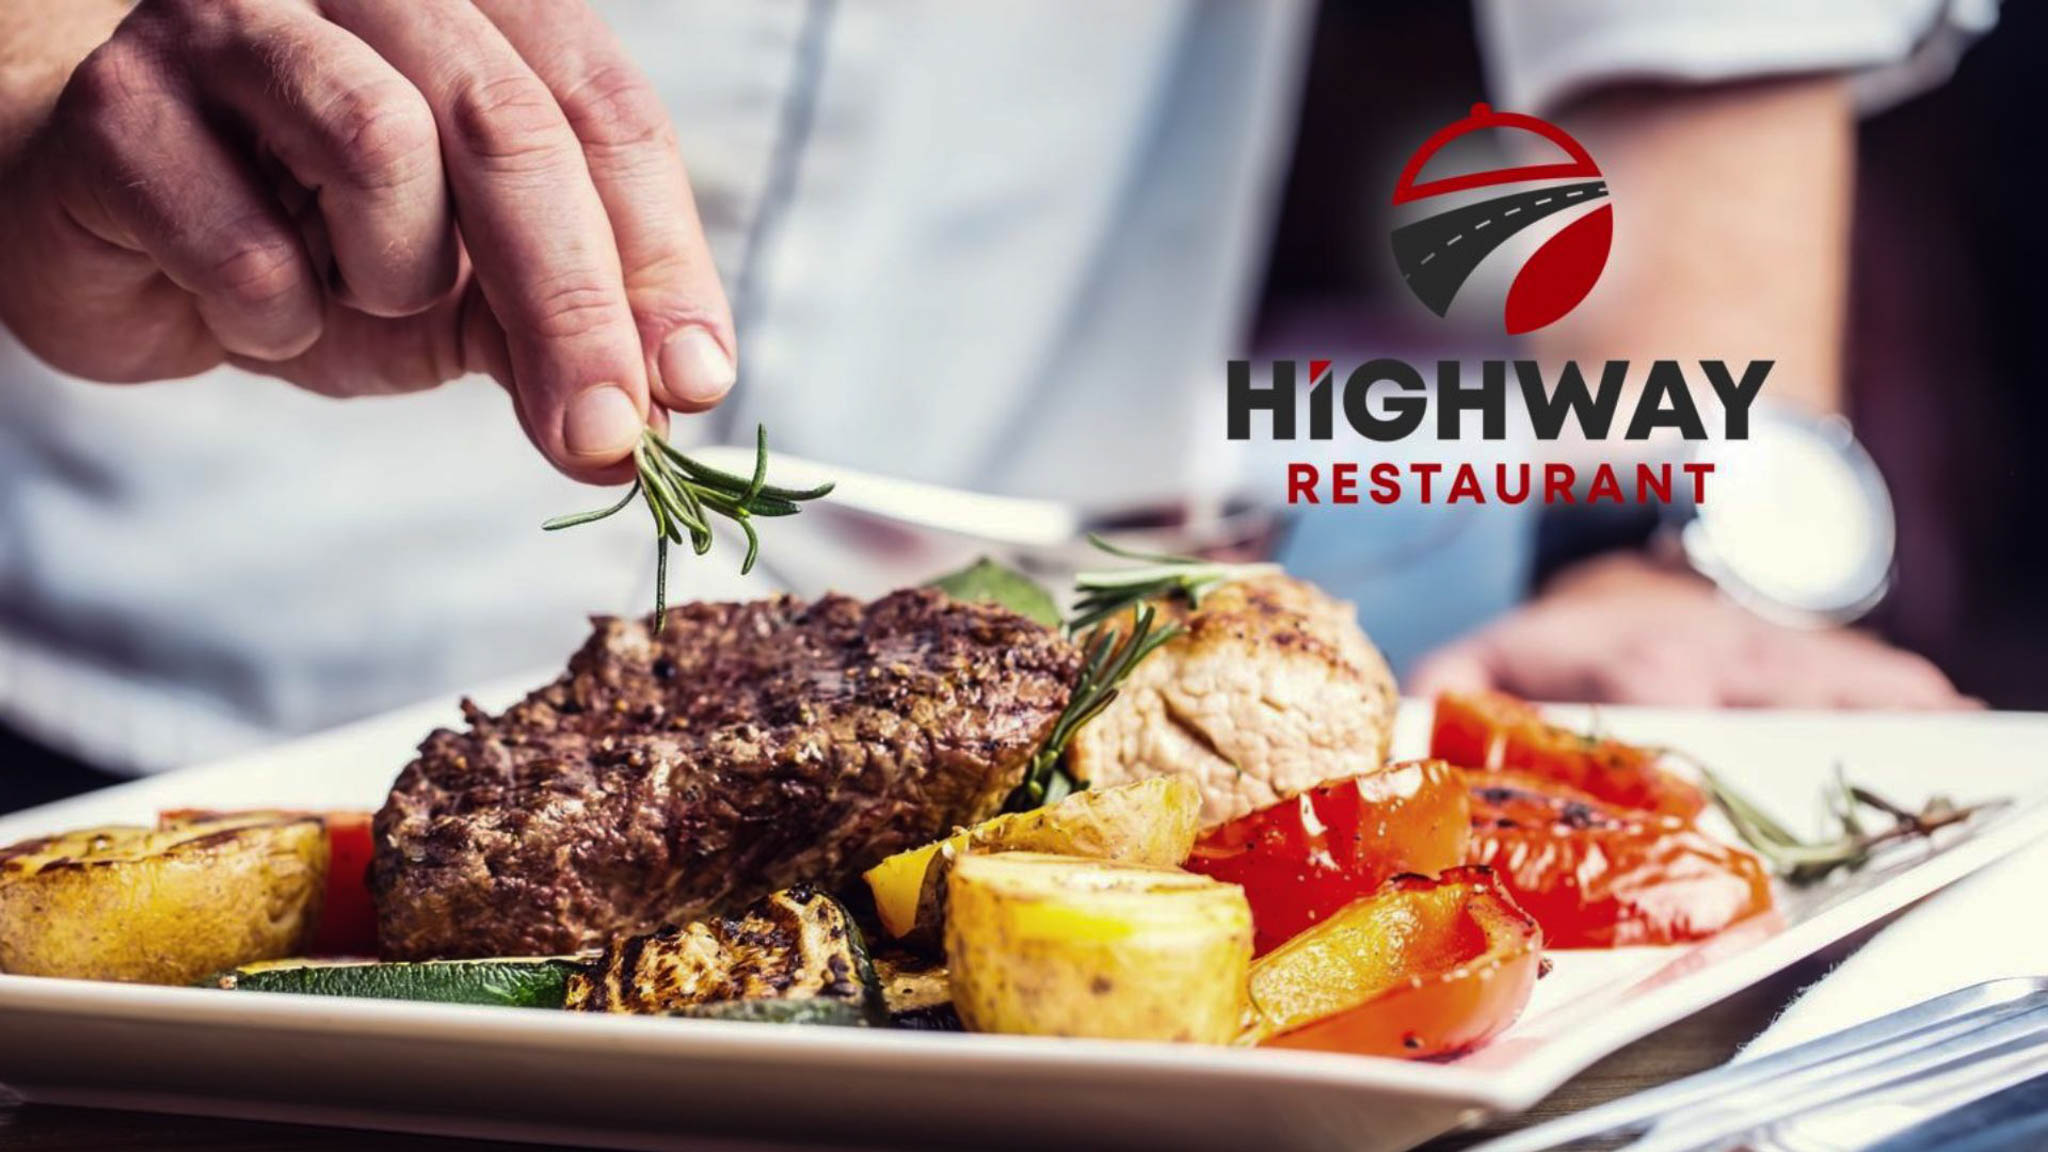 The Highway Restaurant